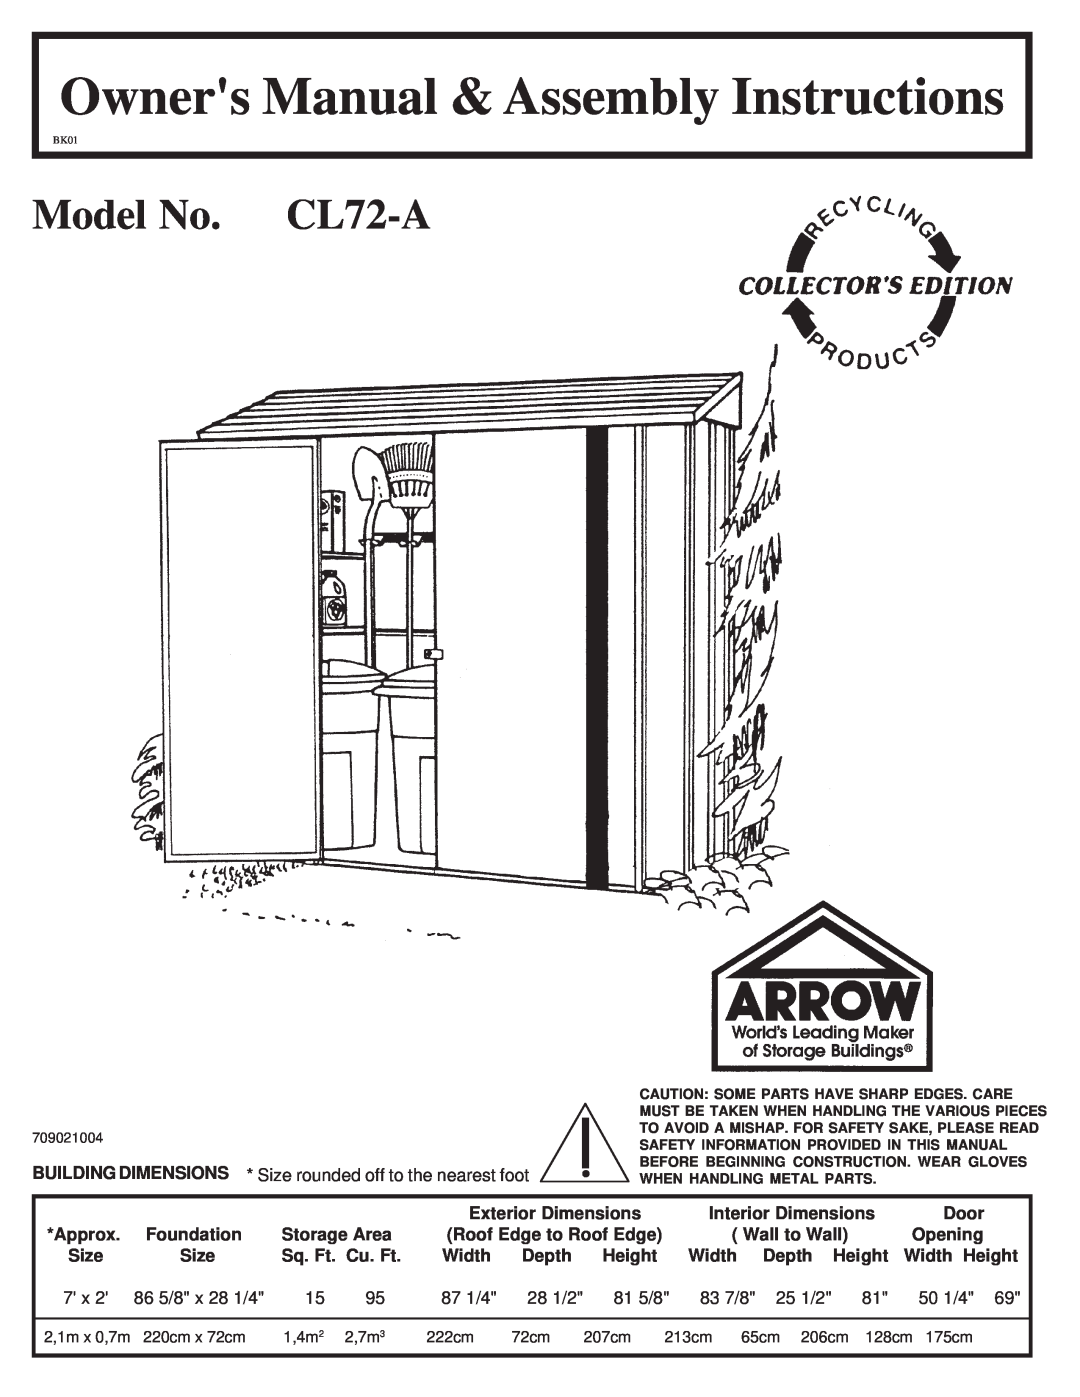 Arrow Plastic owner manual Model No. CL72-A, Exterior Dimensions, Interior Dimensions, Door, Approx, Foundation, Size 